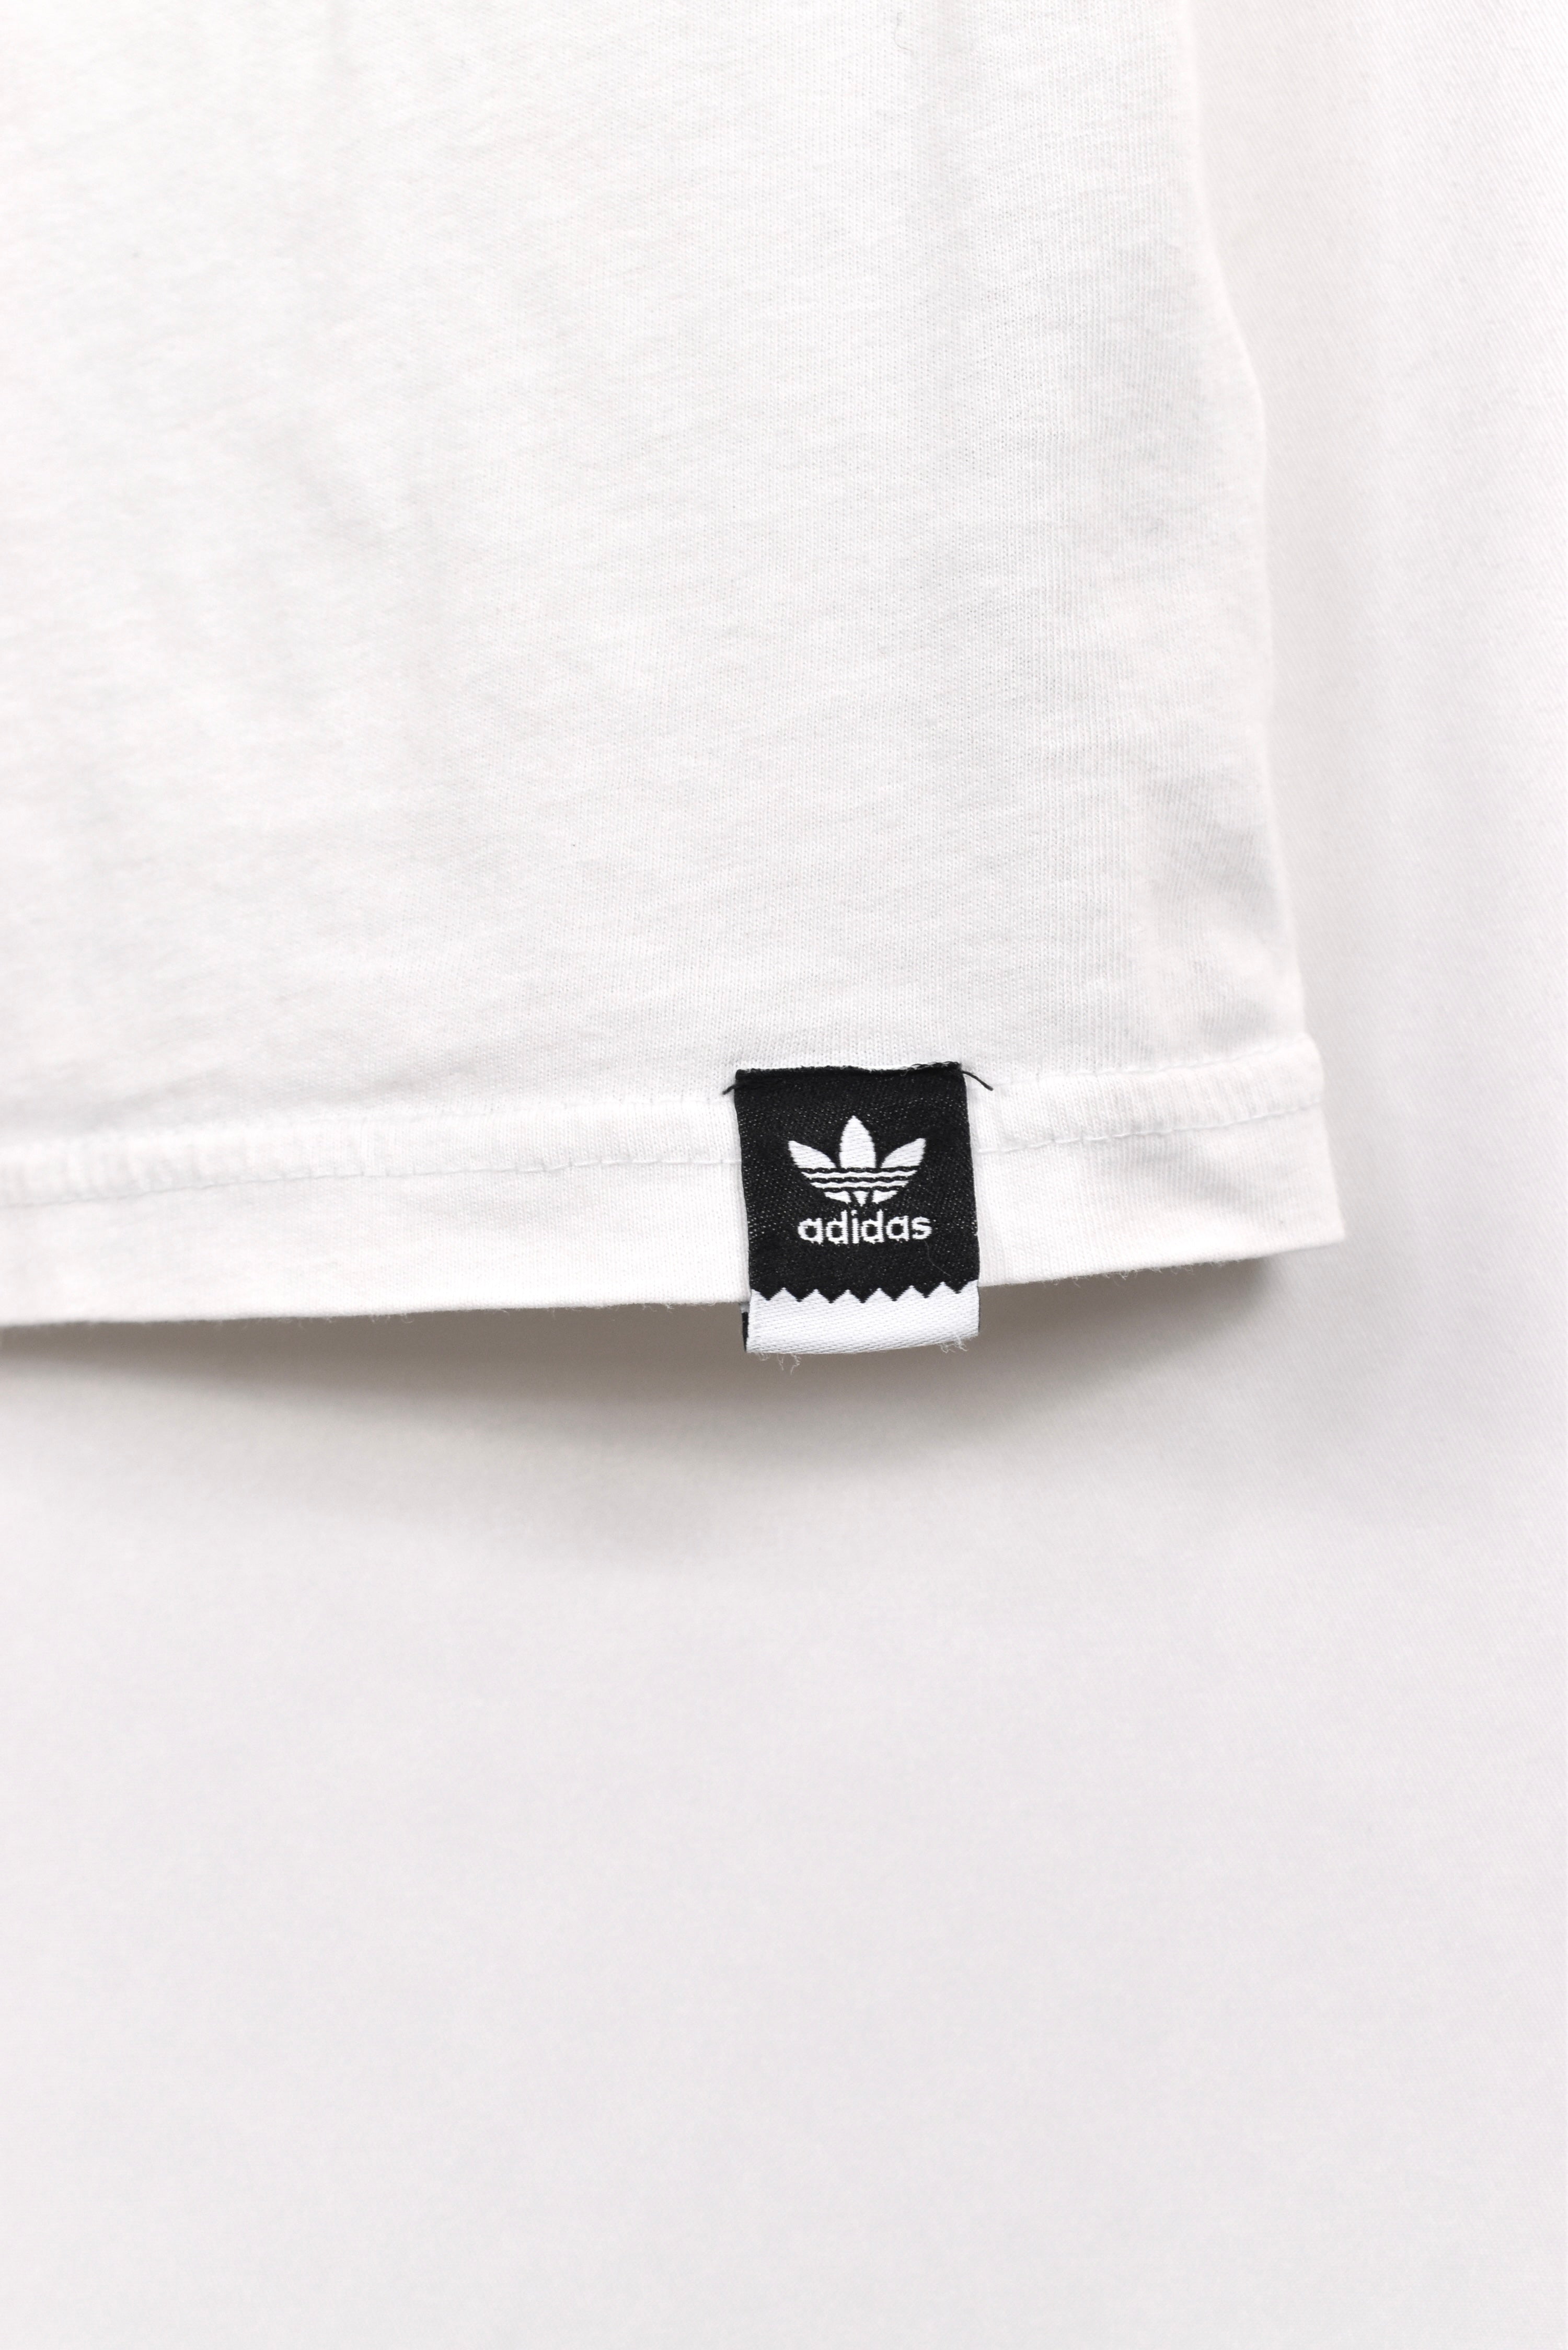 Women's modern Adidas shirt, white graphic tee - AU M ADIDAS